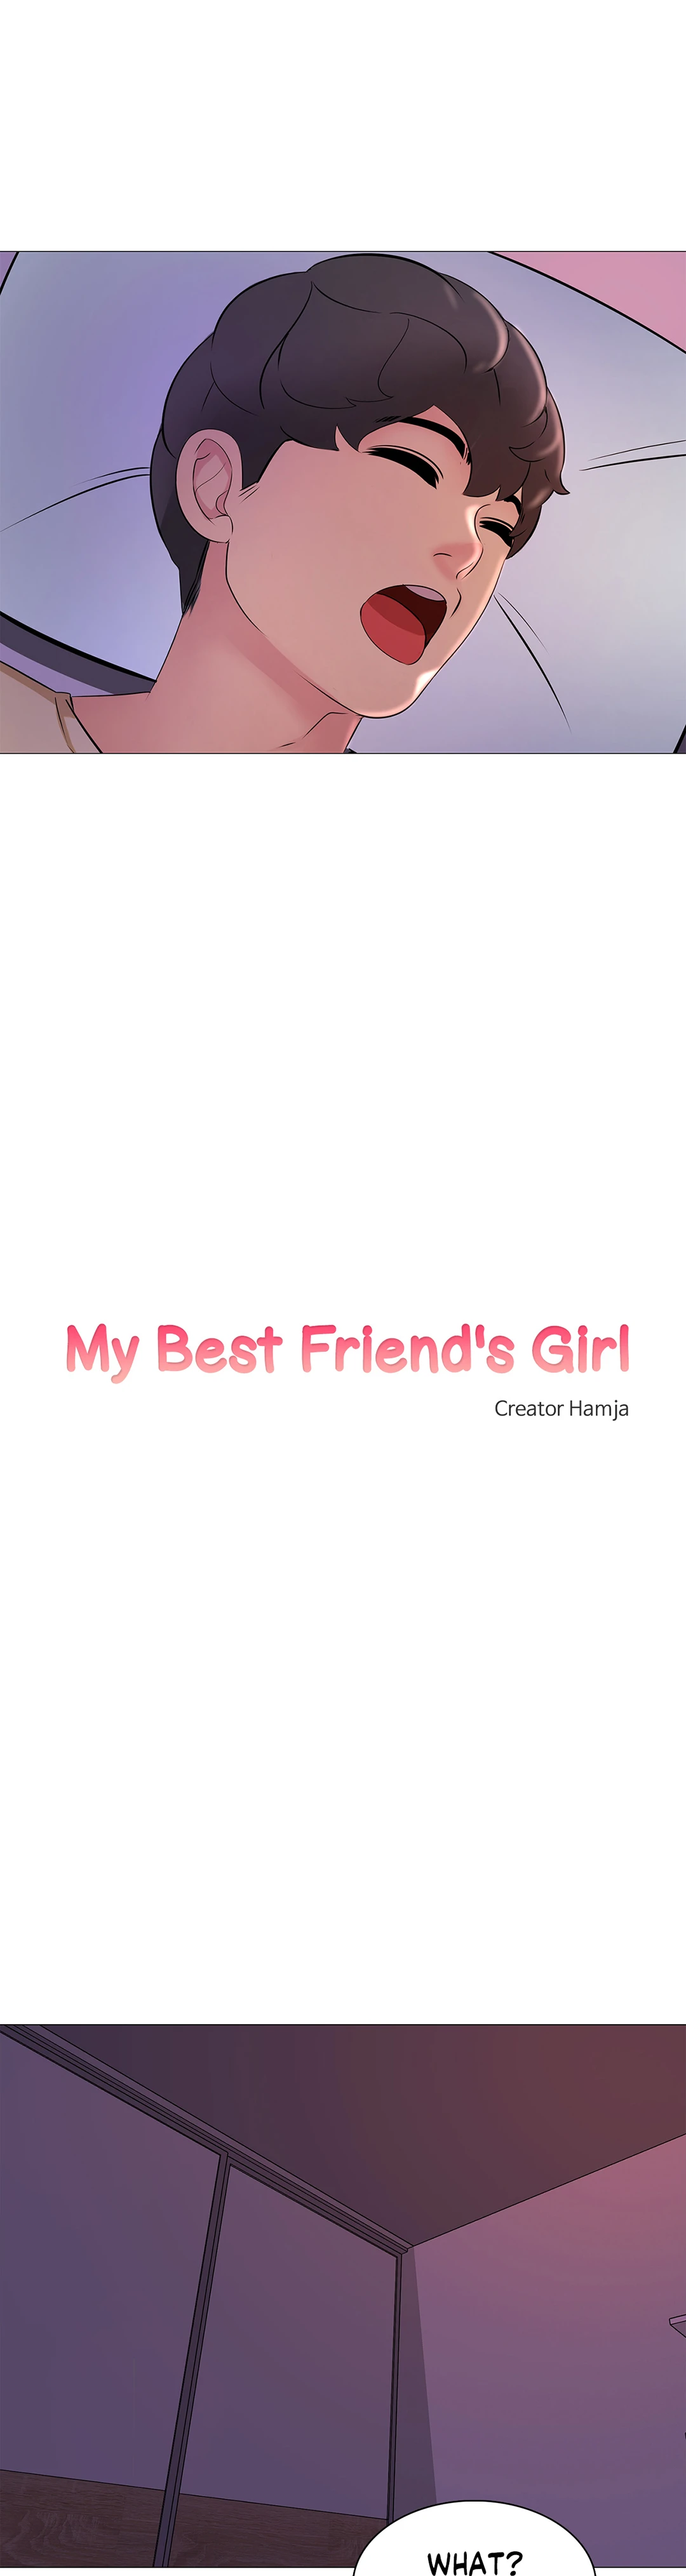 My Best Friend’s Girl image